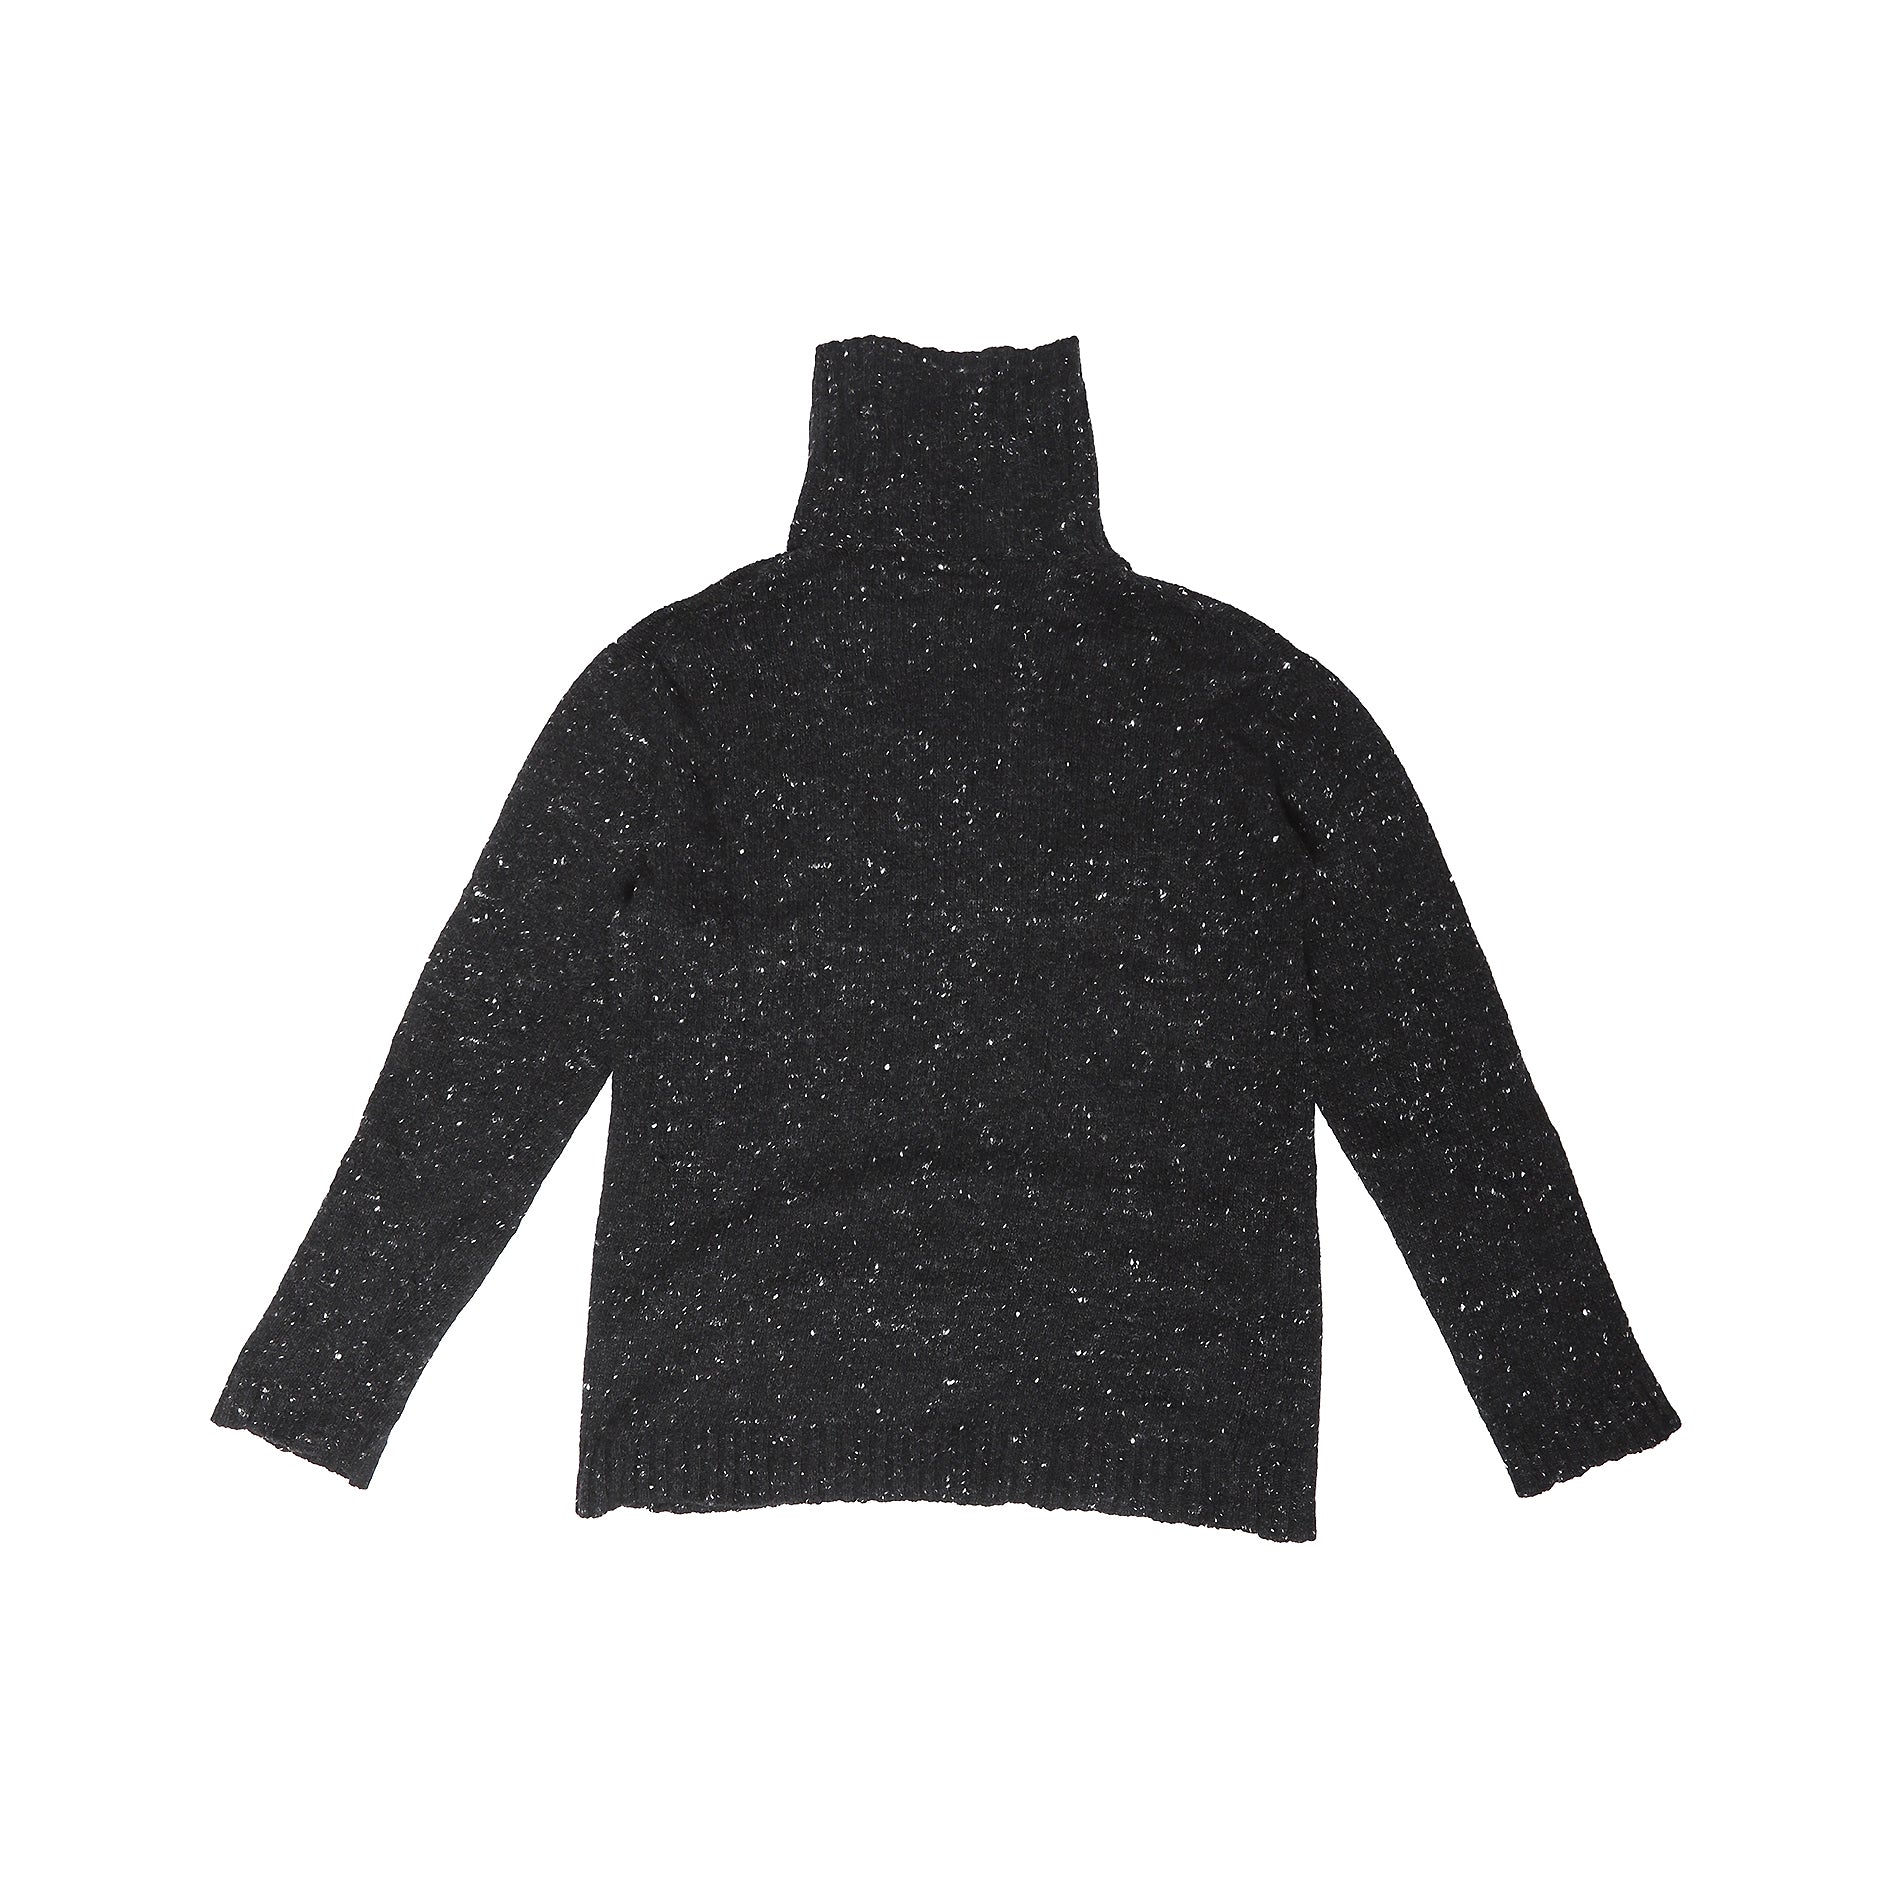 Yohji Yamamoto Pour Homme Black Melange Turtleneck Knit Sweater